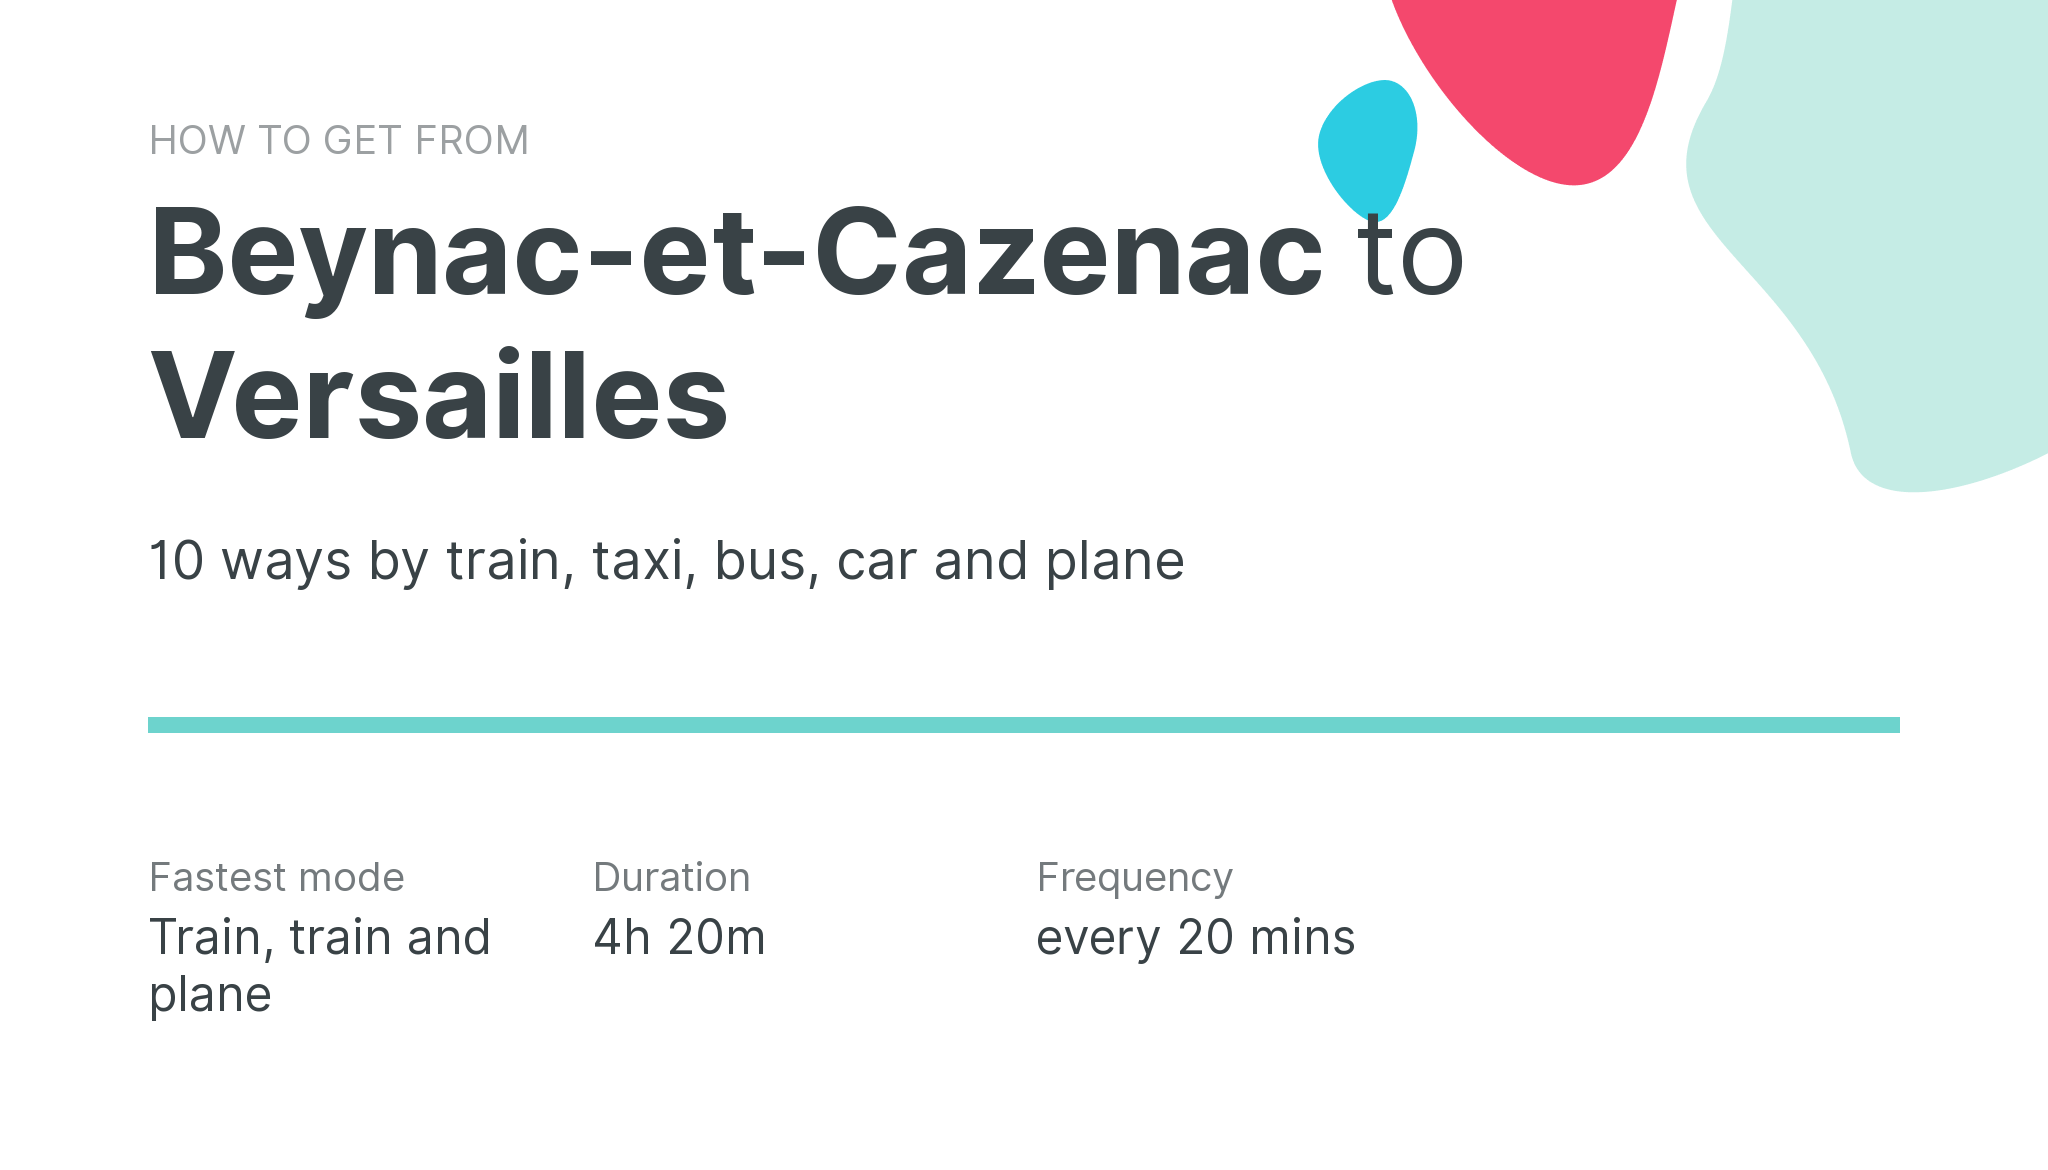 How do I get from Beynac-et-Cazenac to Versailles